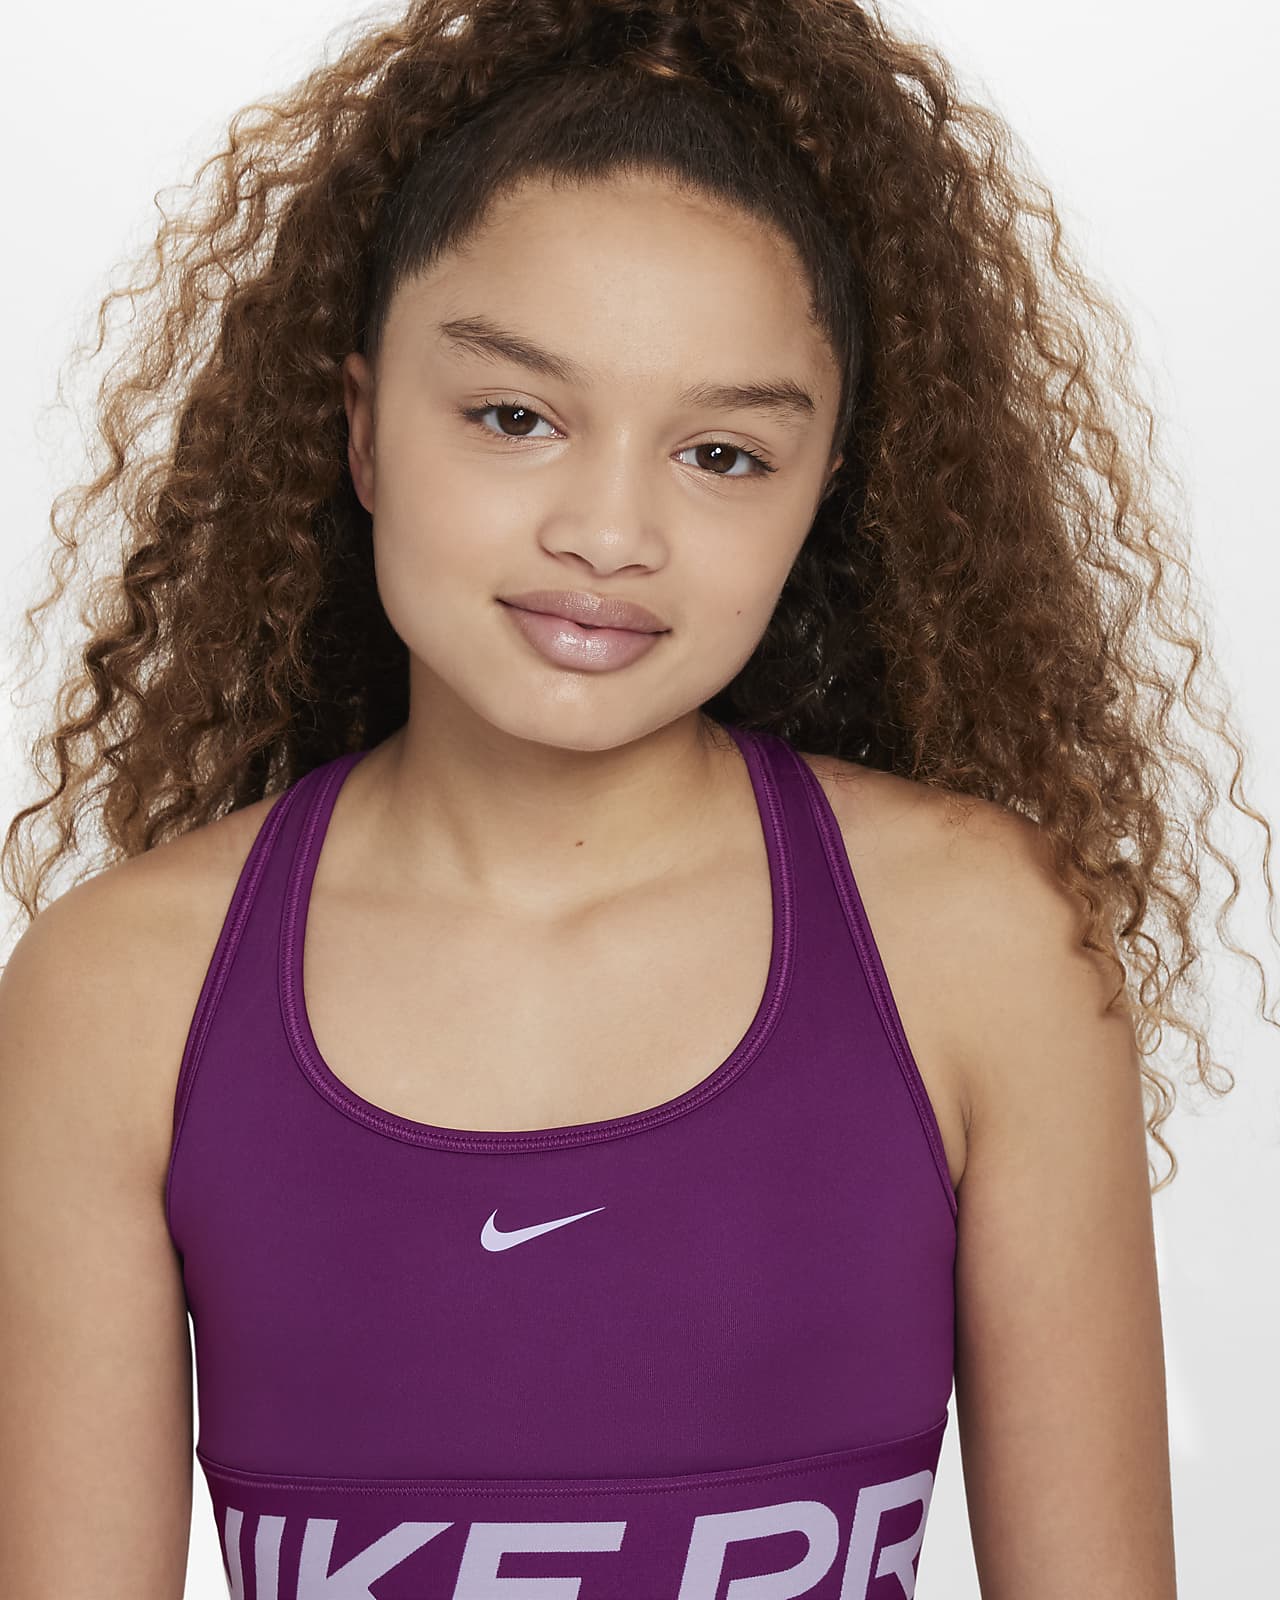 Girls Red Sports Bras. Nike IN